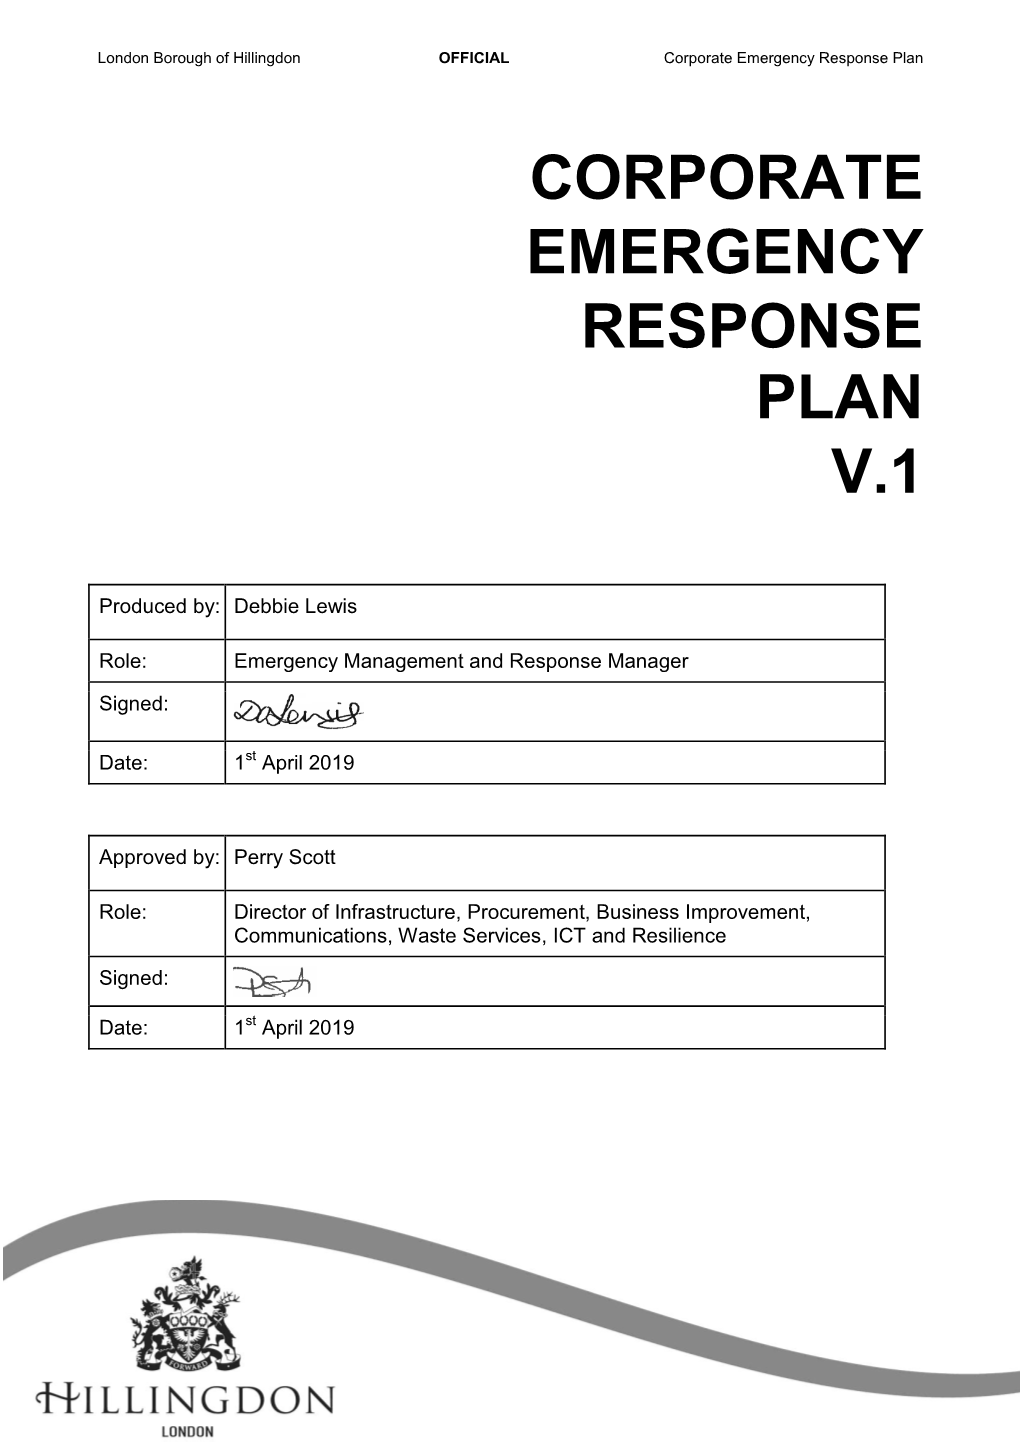 Corporate Emergency Response Plan